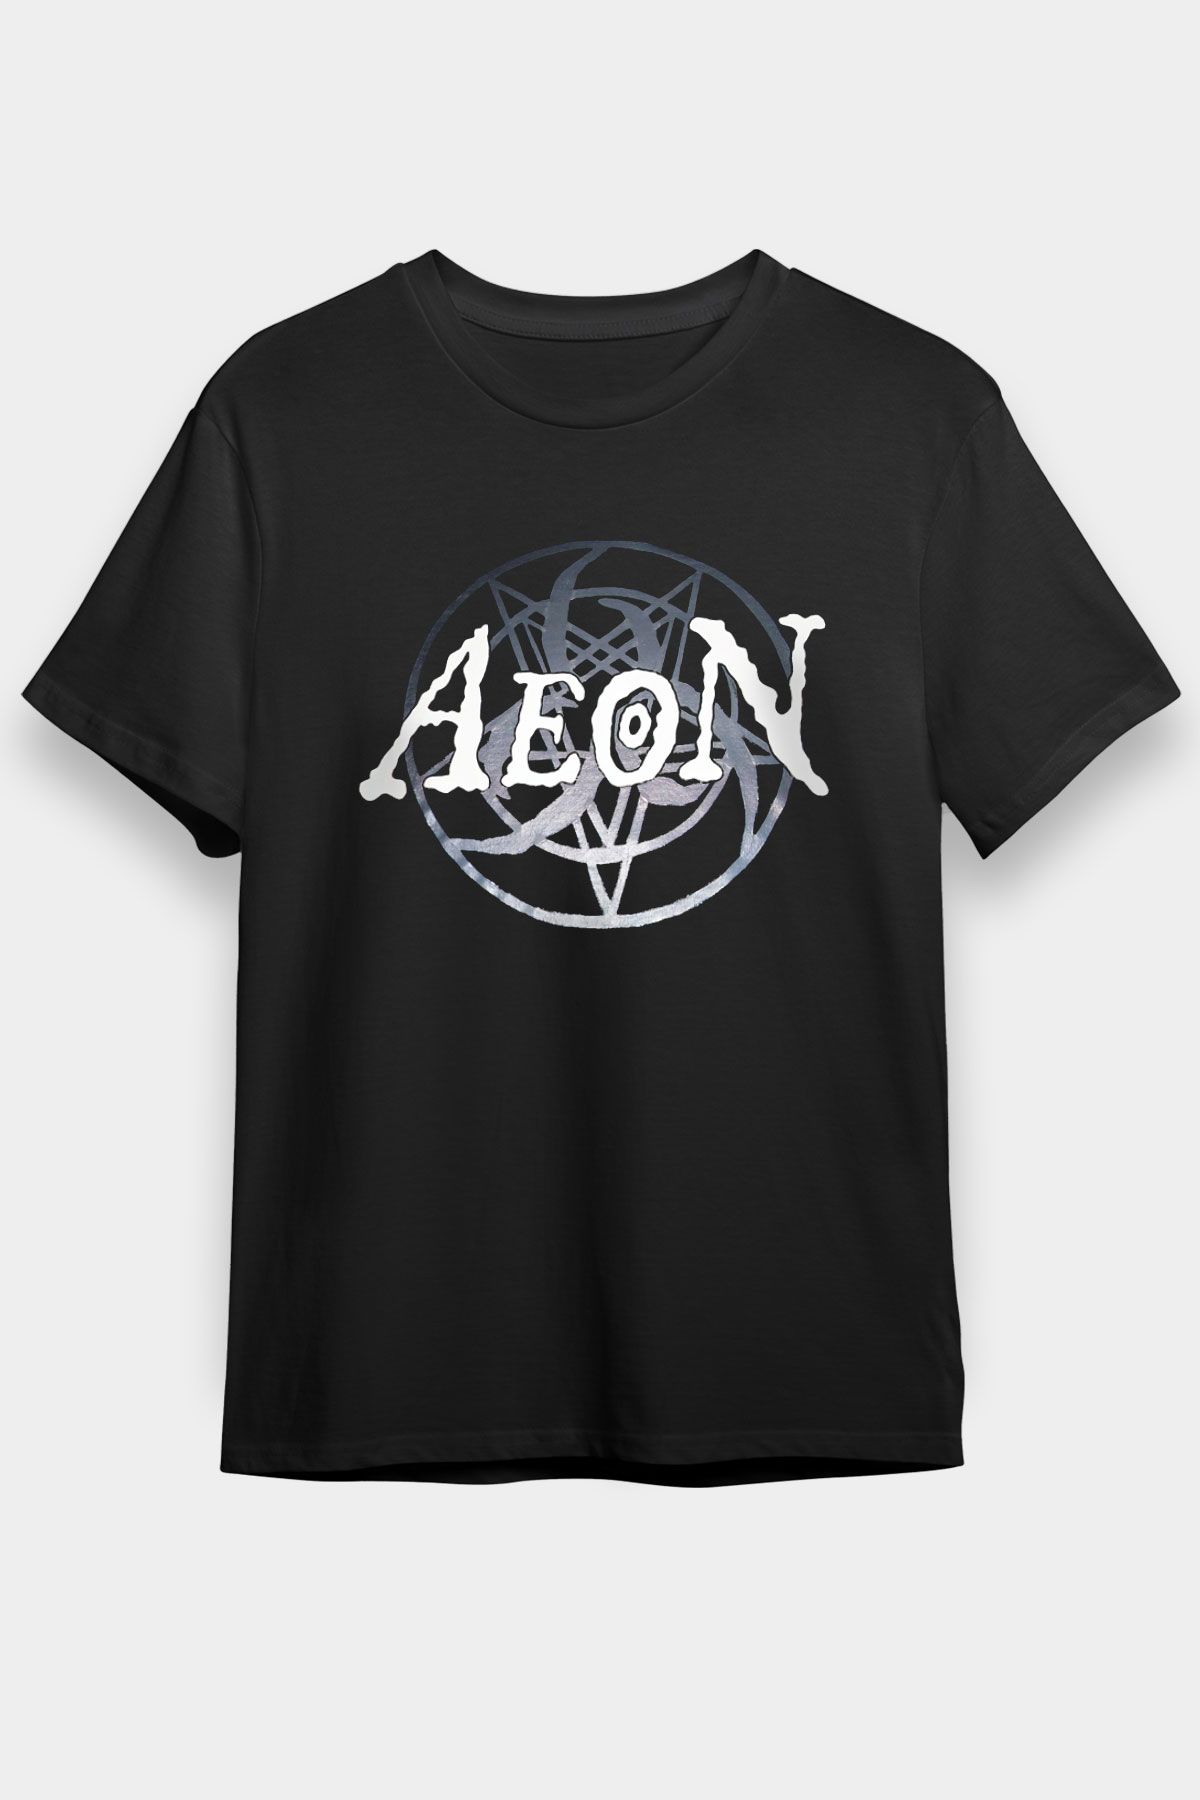 Aeon Black Unisex Tee - STREETWEAR